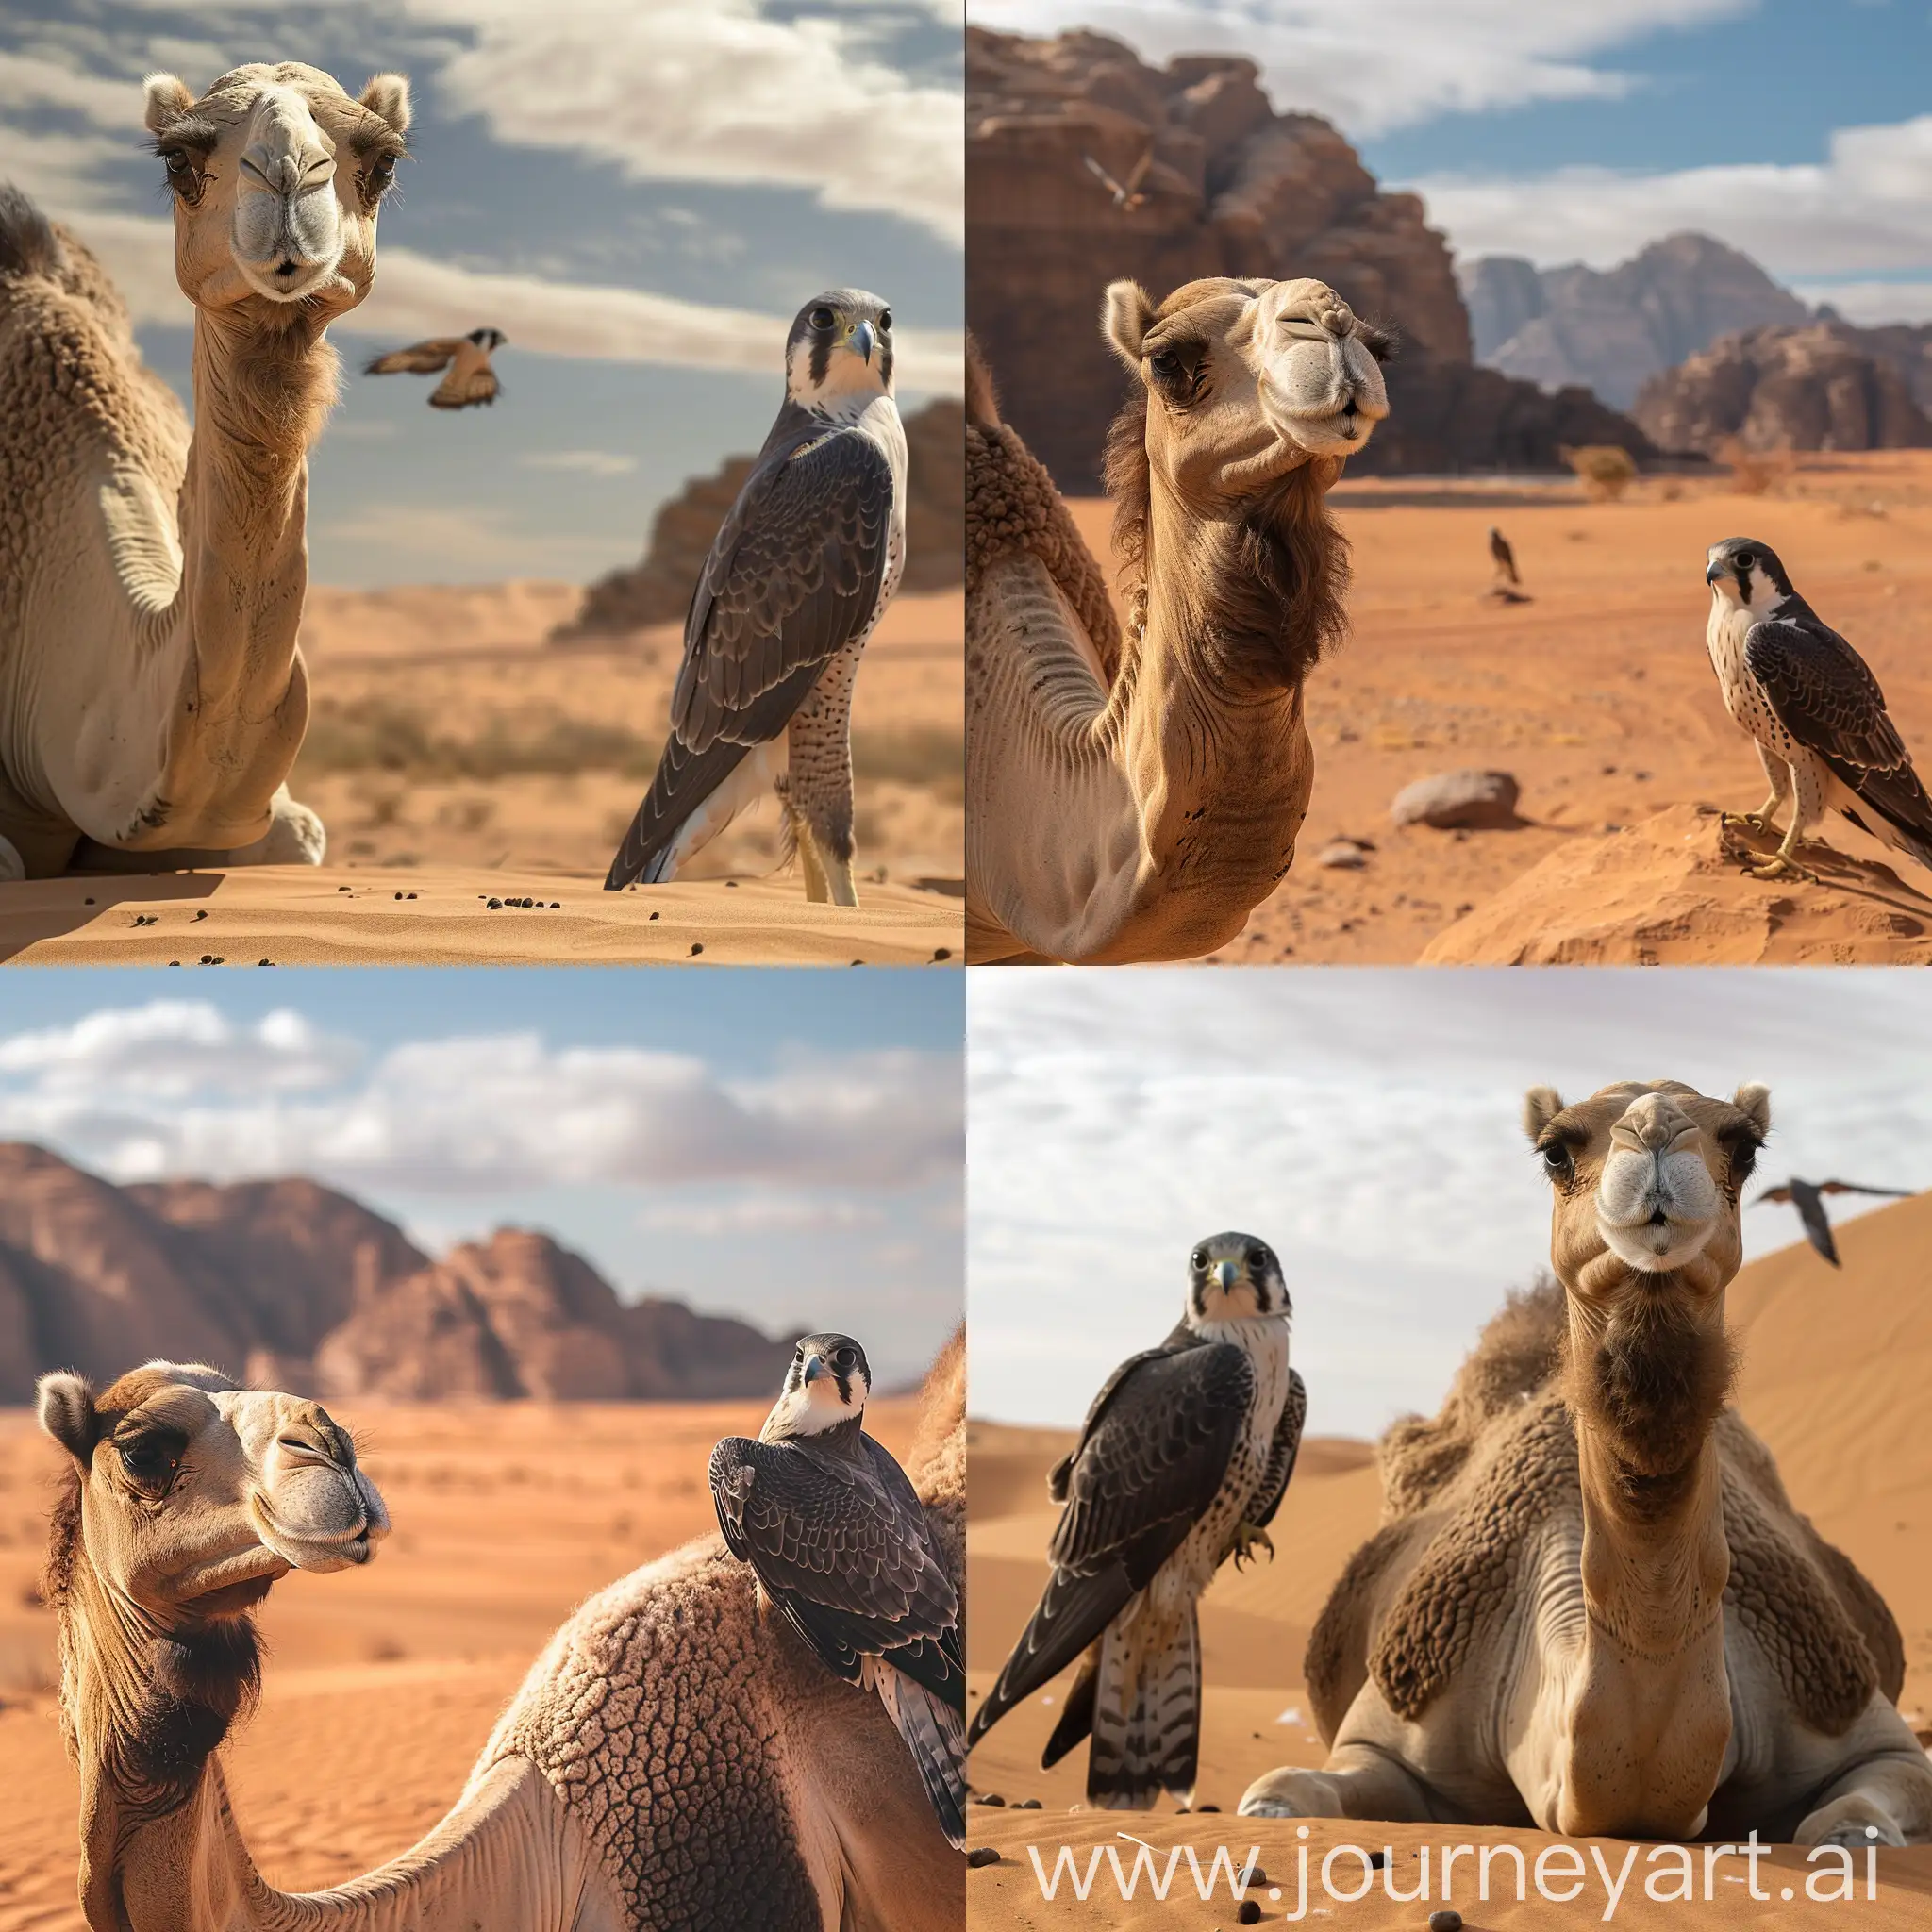 Majestic-Camel-and-Desert-Falcon-Encounter-in-Vast-Desert-Landscape